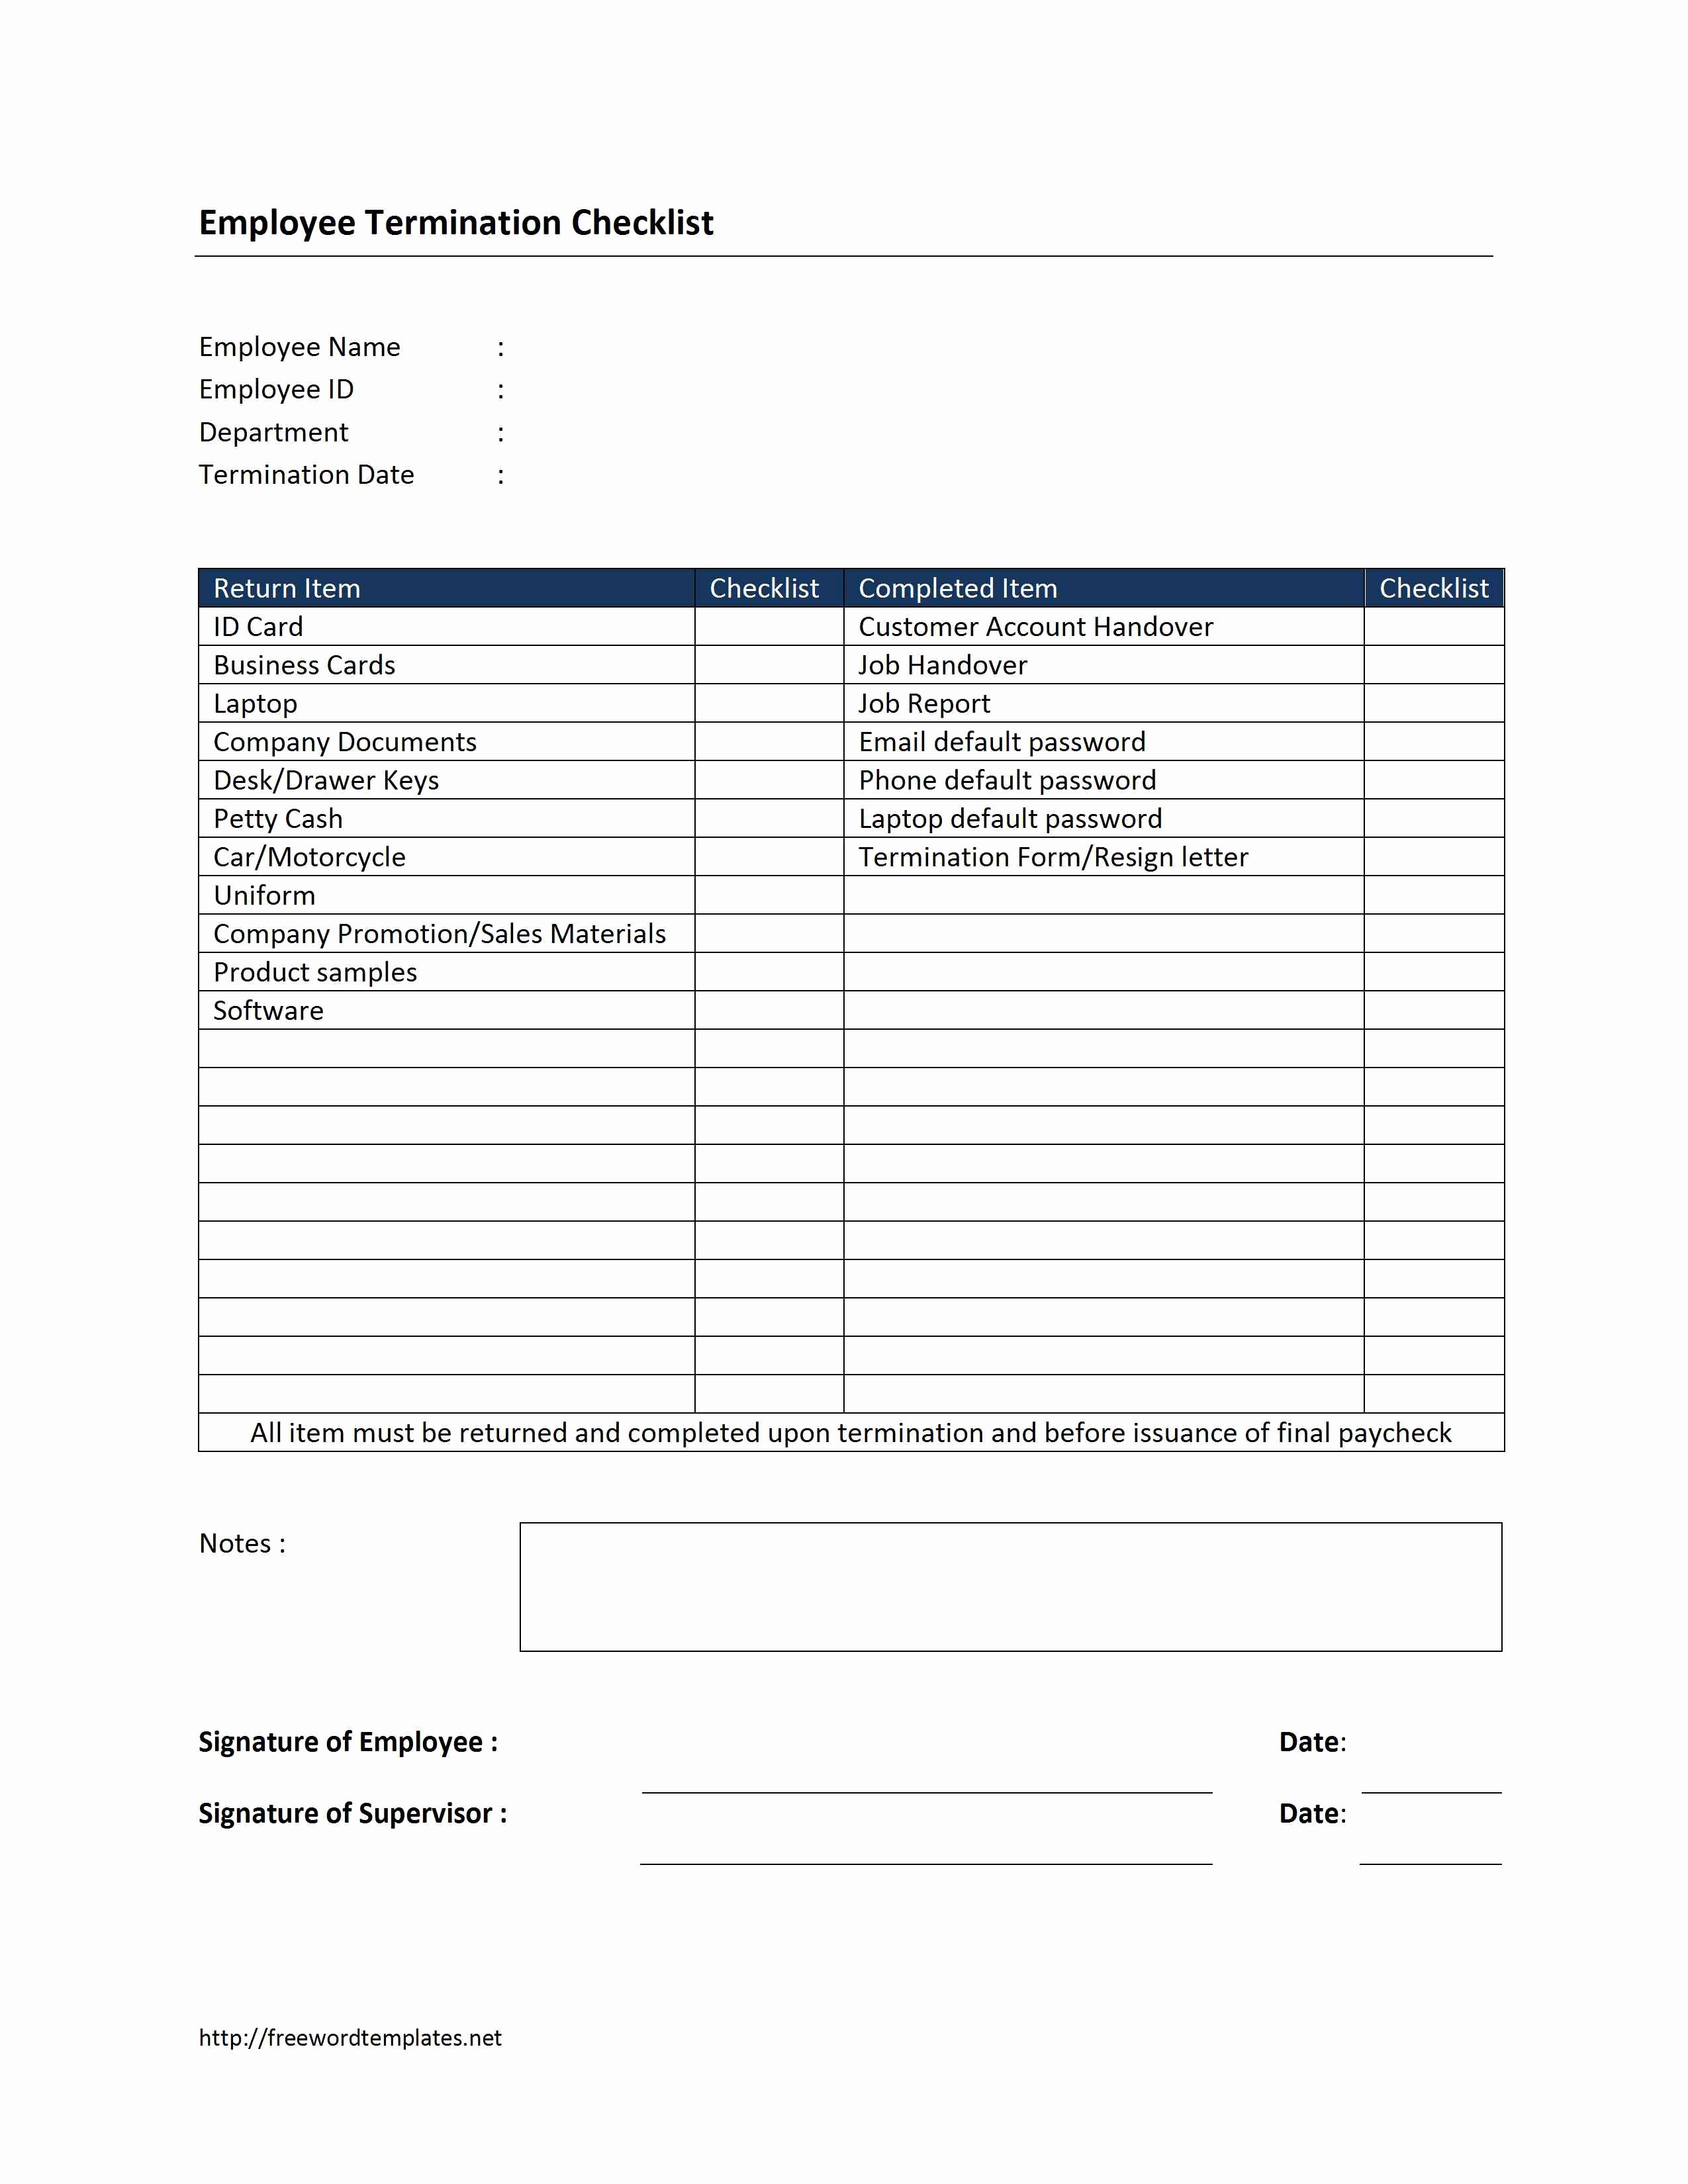 Employee Termination form Pdf Best Of Employment Termination Checklist Template